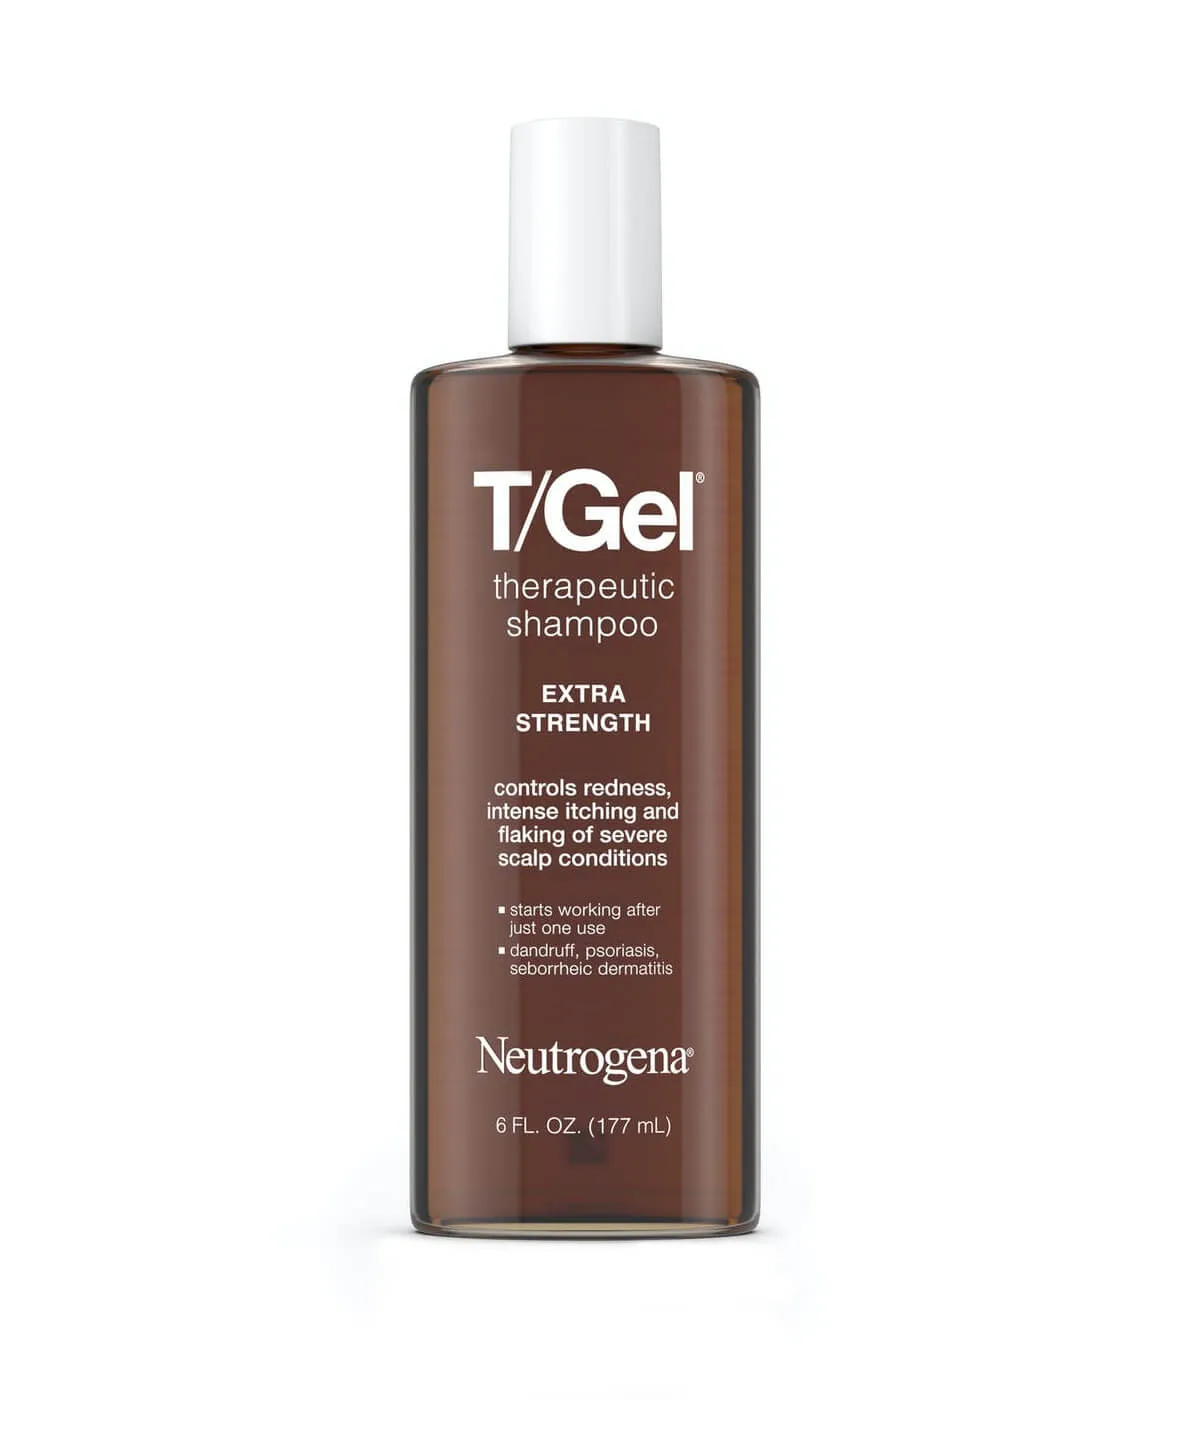 T/Gel Therapeutic Shampoo by Neutrogena, anti-dandruff shampoo (with Coal Tar Extract).